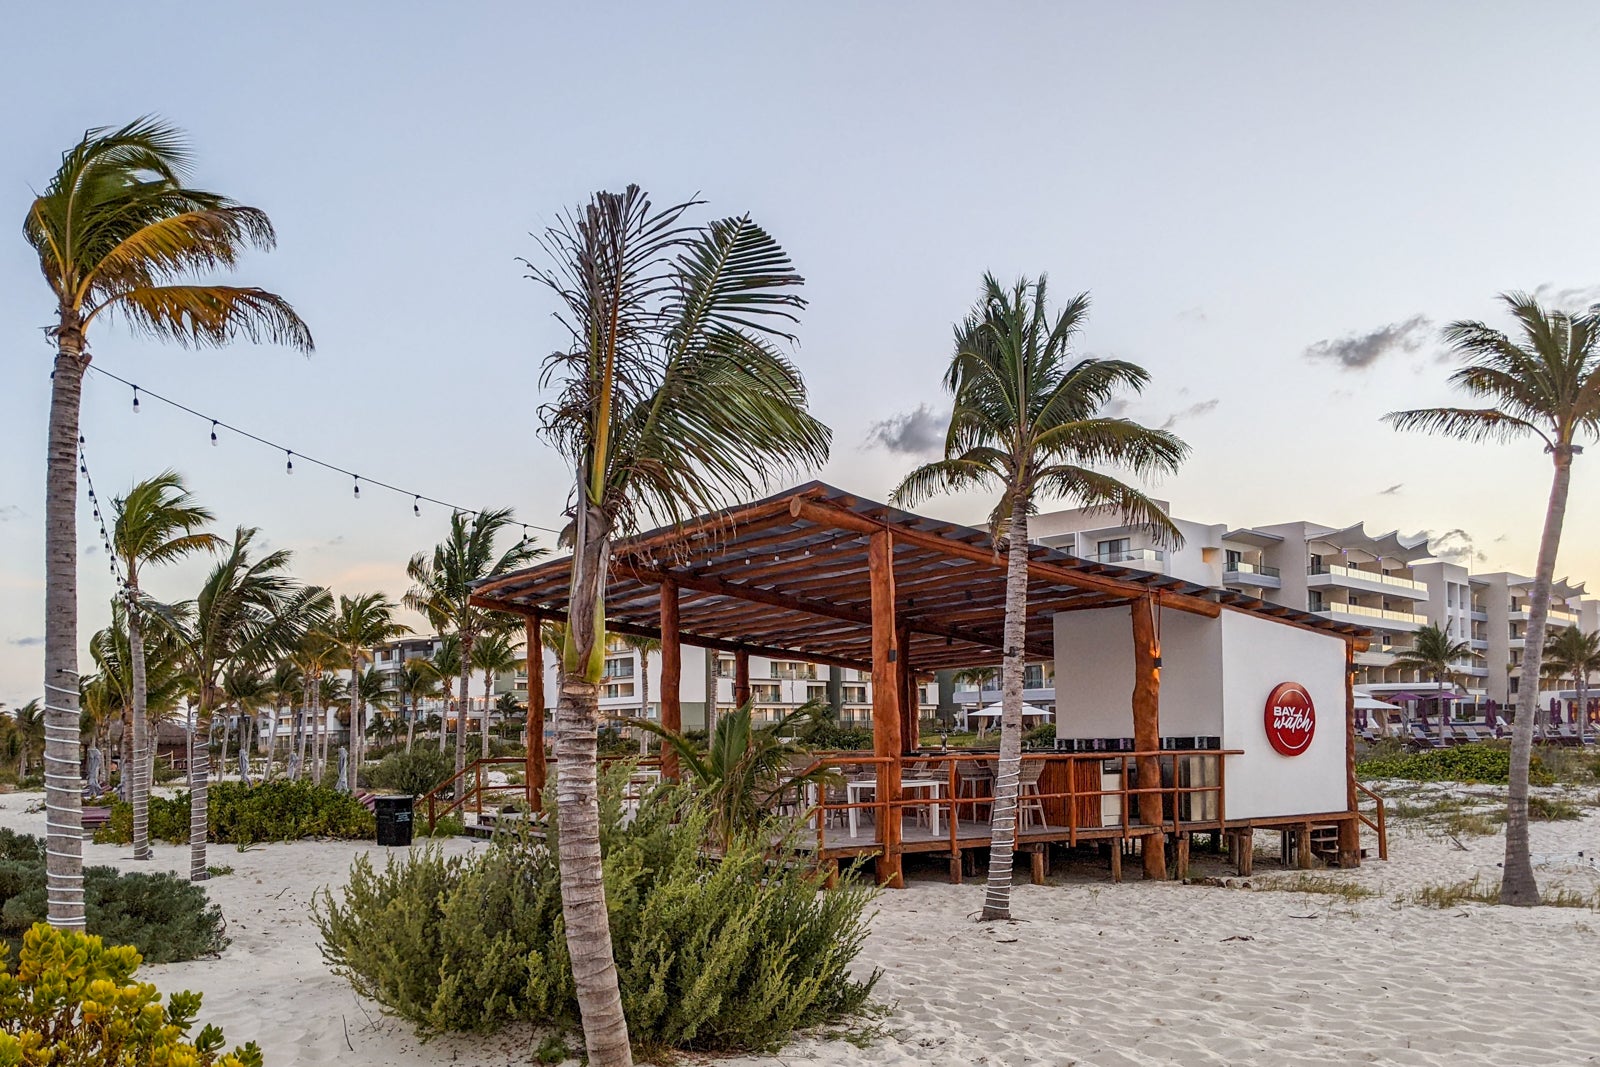 Planet Hollywood Cancun beach bar